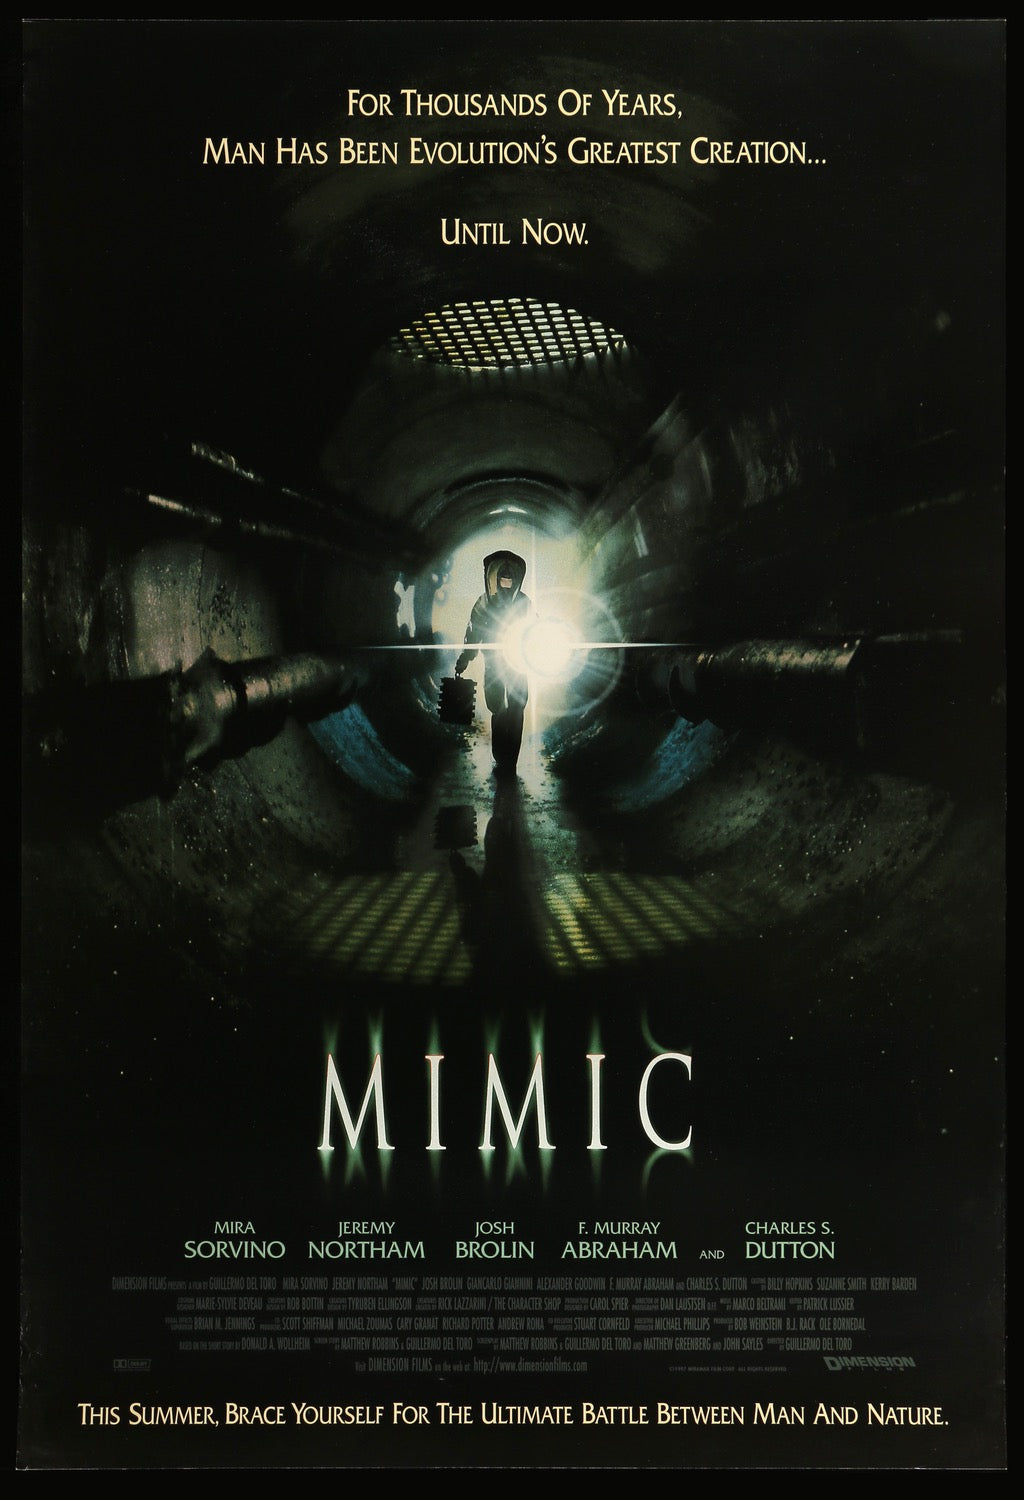 Mimic (1997) original movie poster for sale at Original Film Art